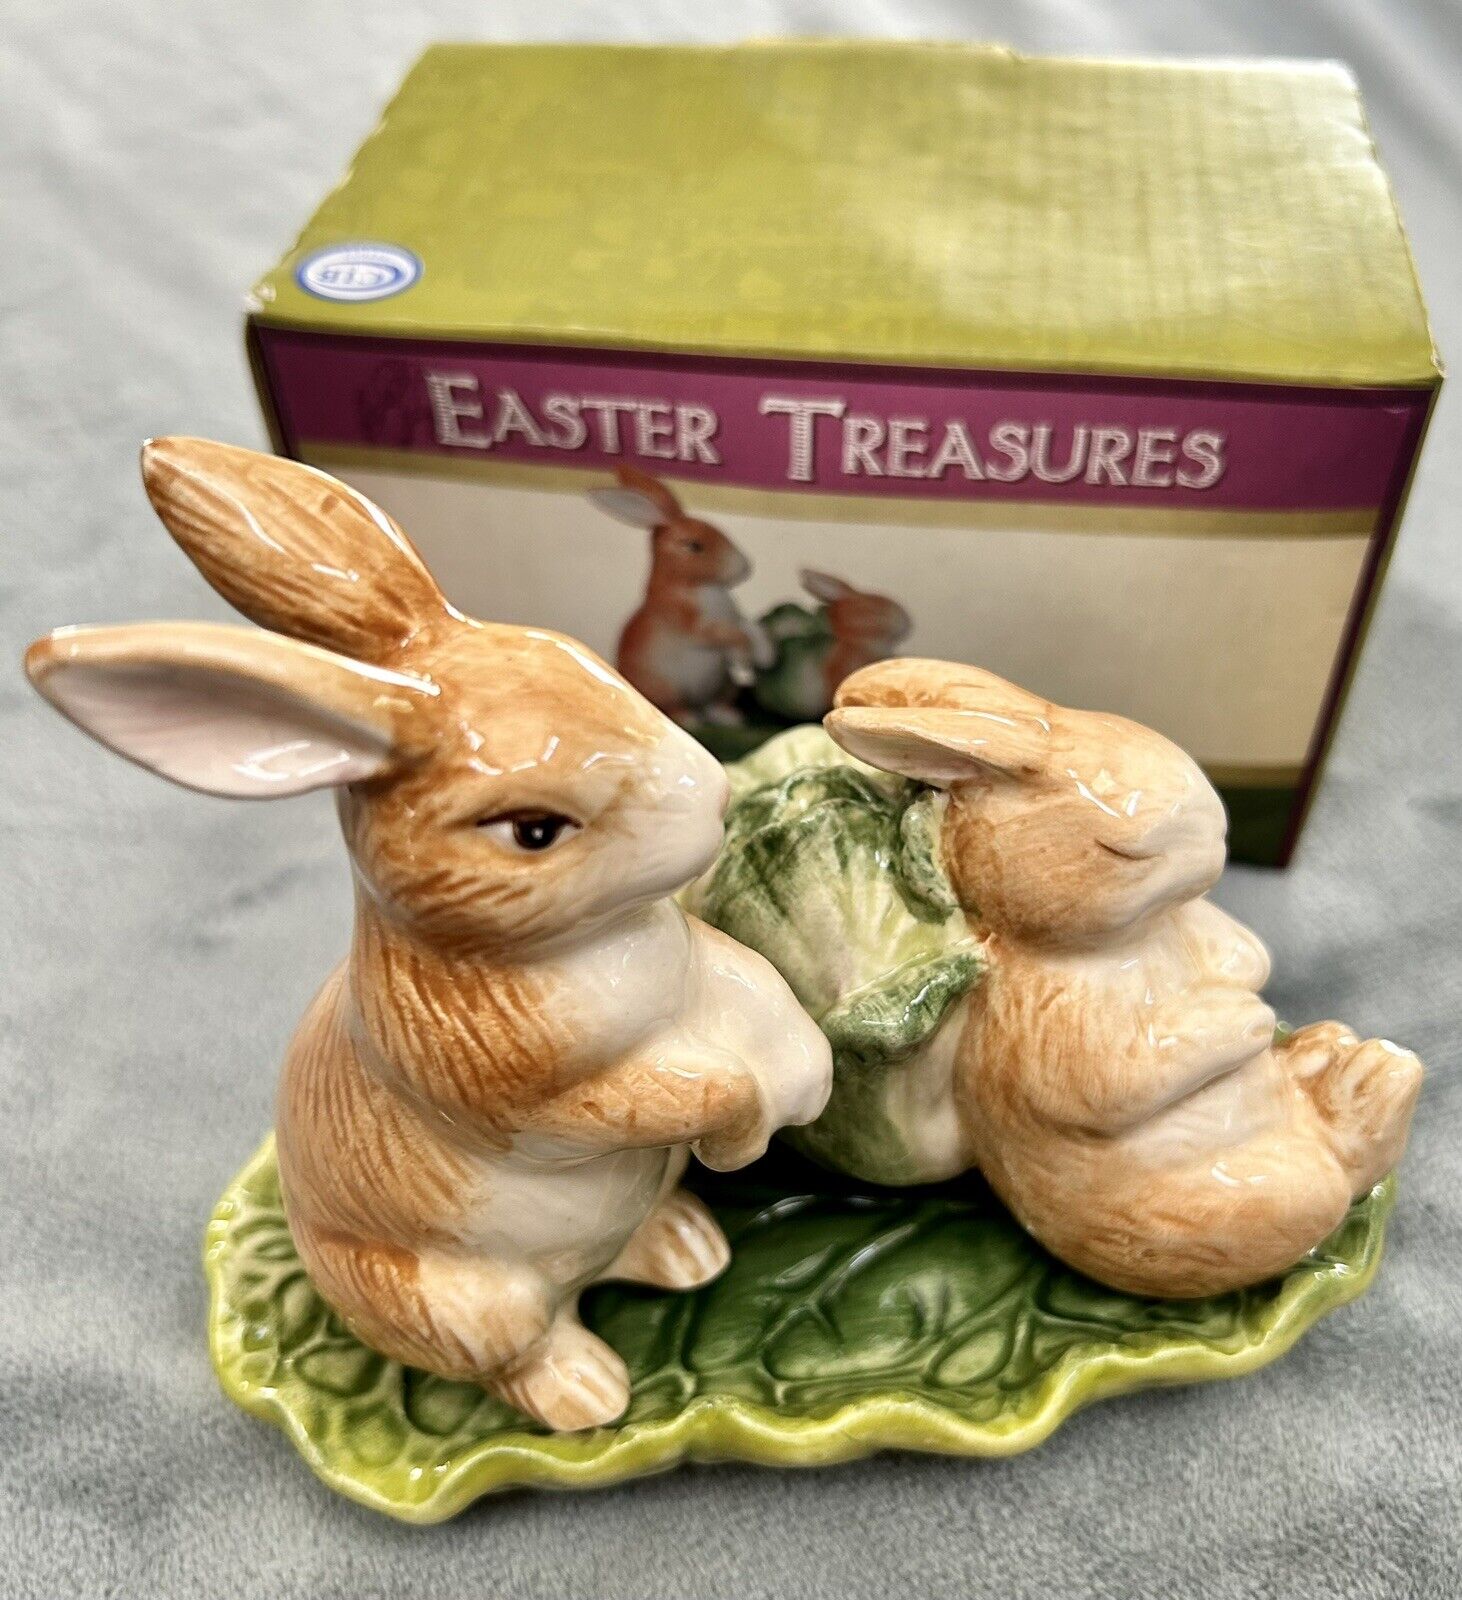 New Cracker Barrel Easter Treasures Bunny Rabbit Salt & Pepper Shakers w/ Tray